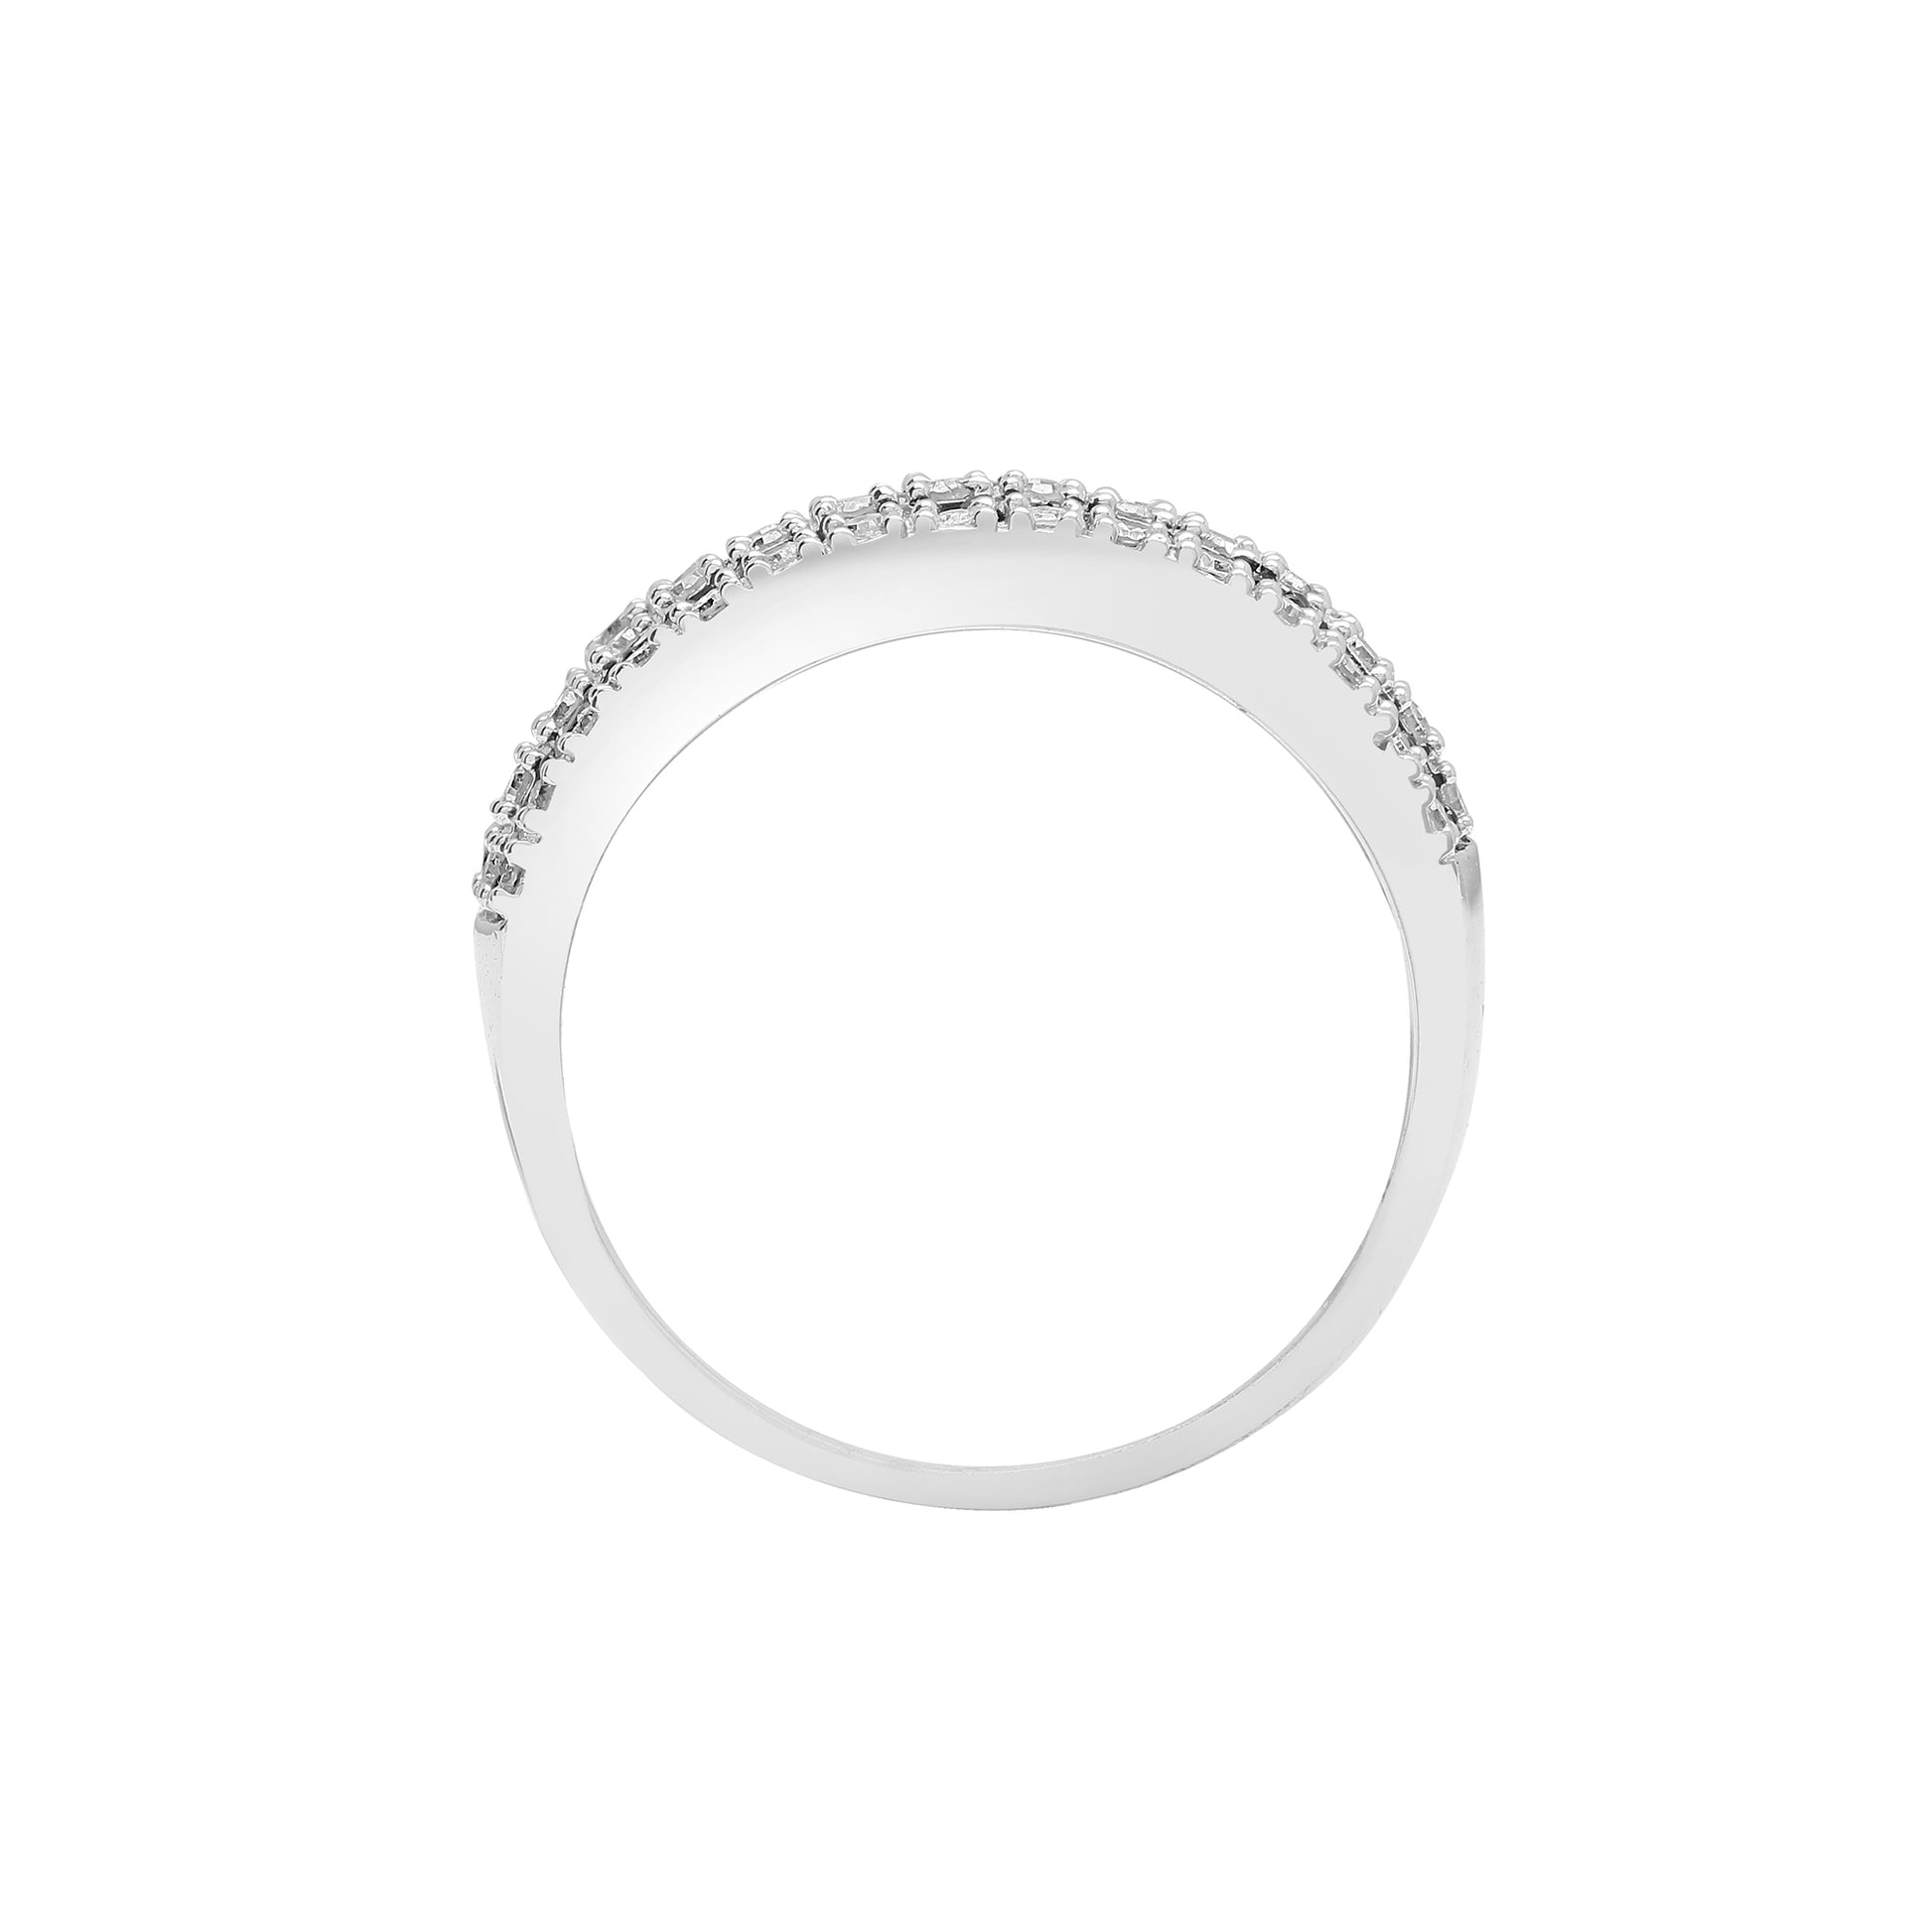 9ct White Gold  0.32ct Diamond 7 Row Eternity Ring 10mm - 9R554